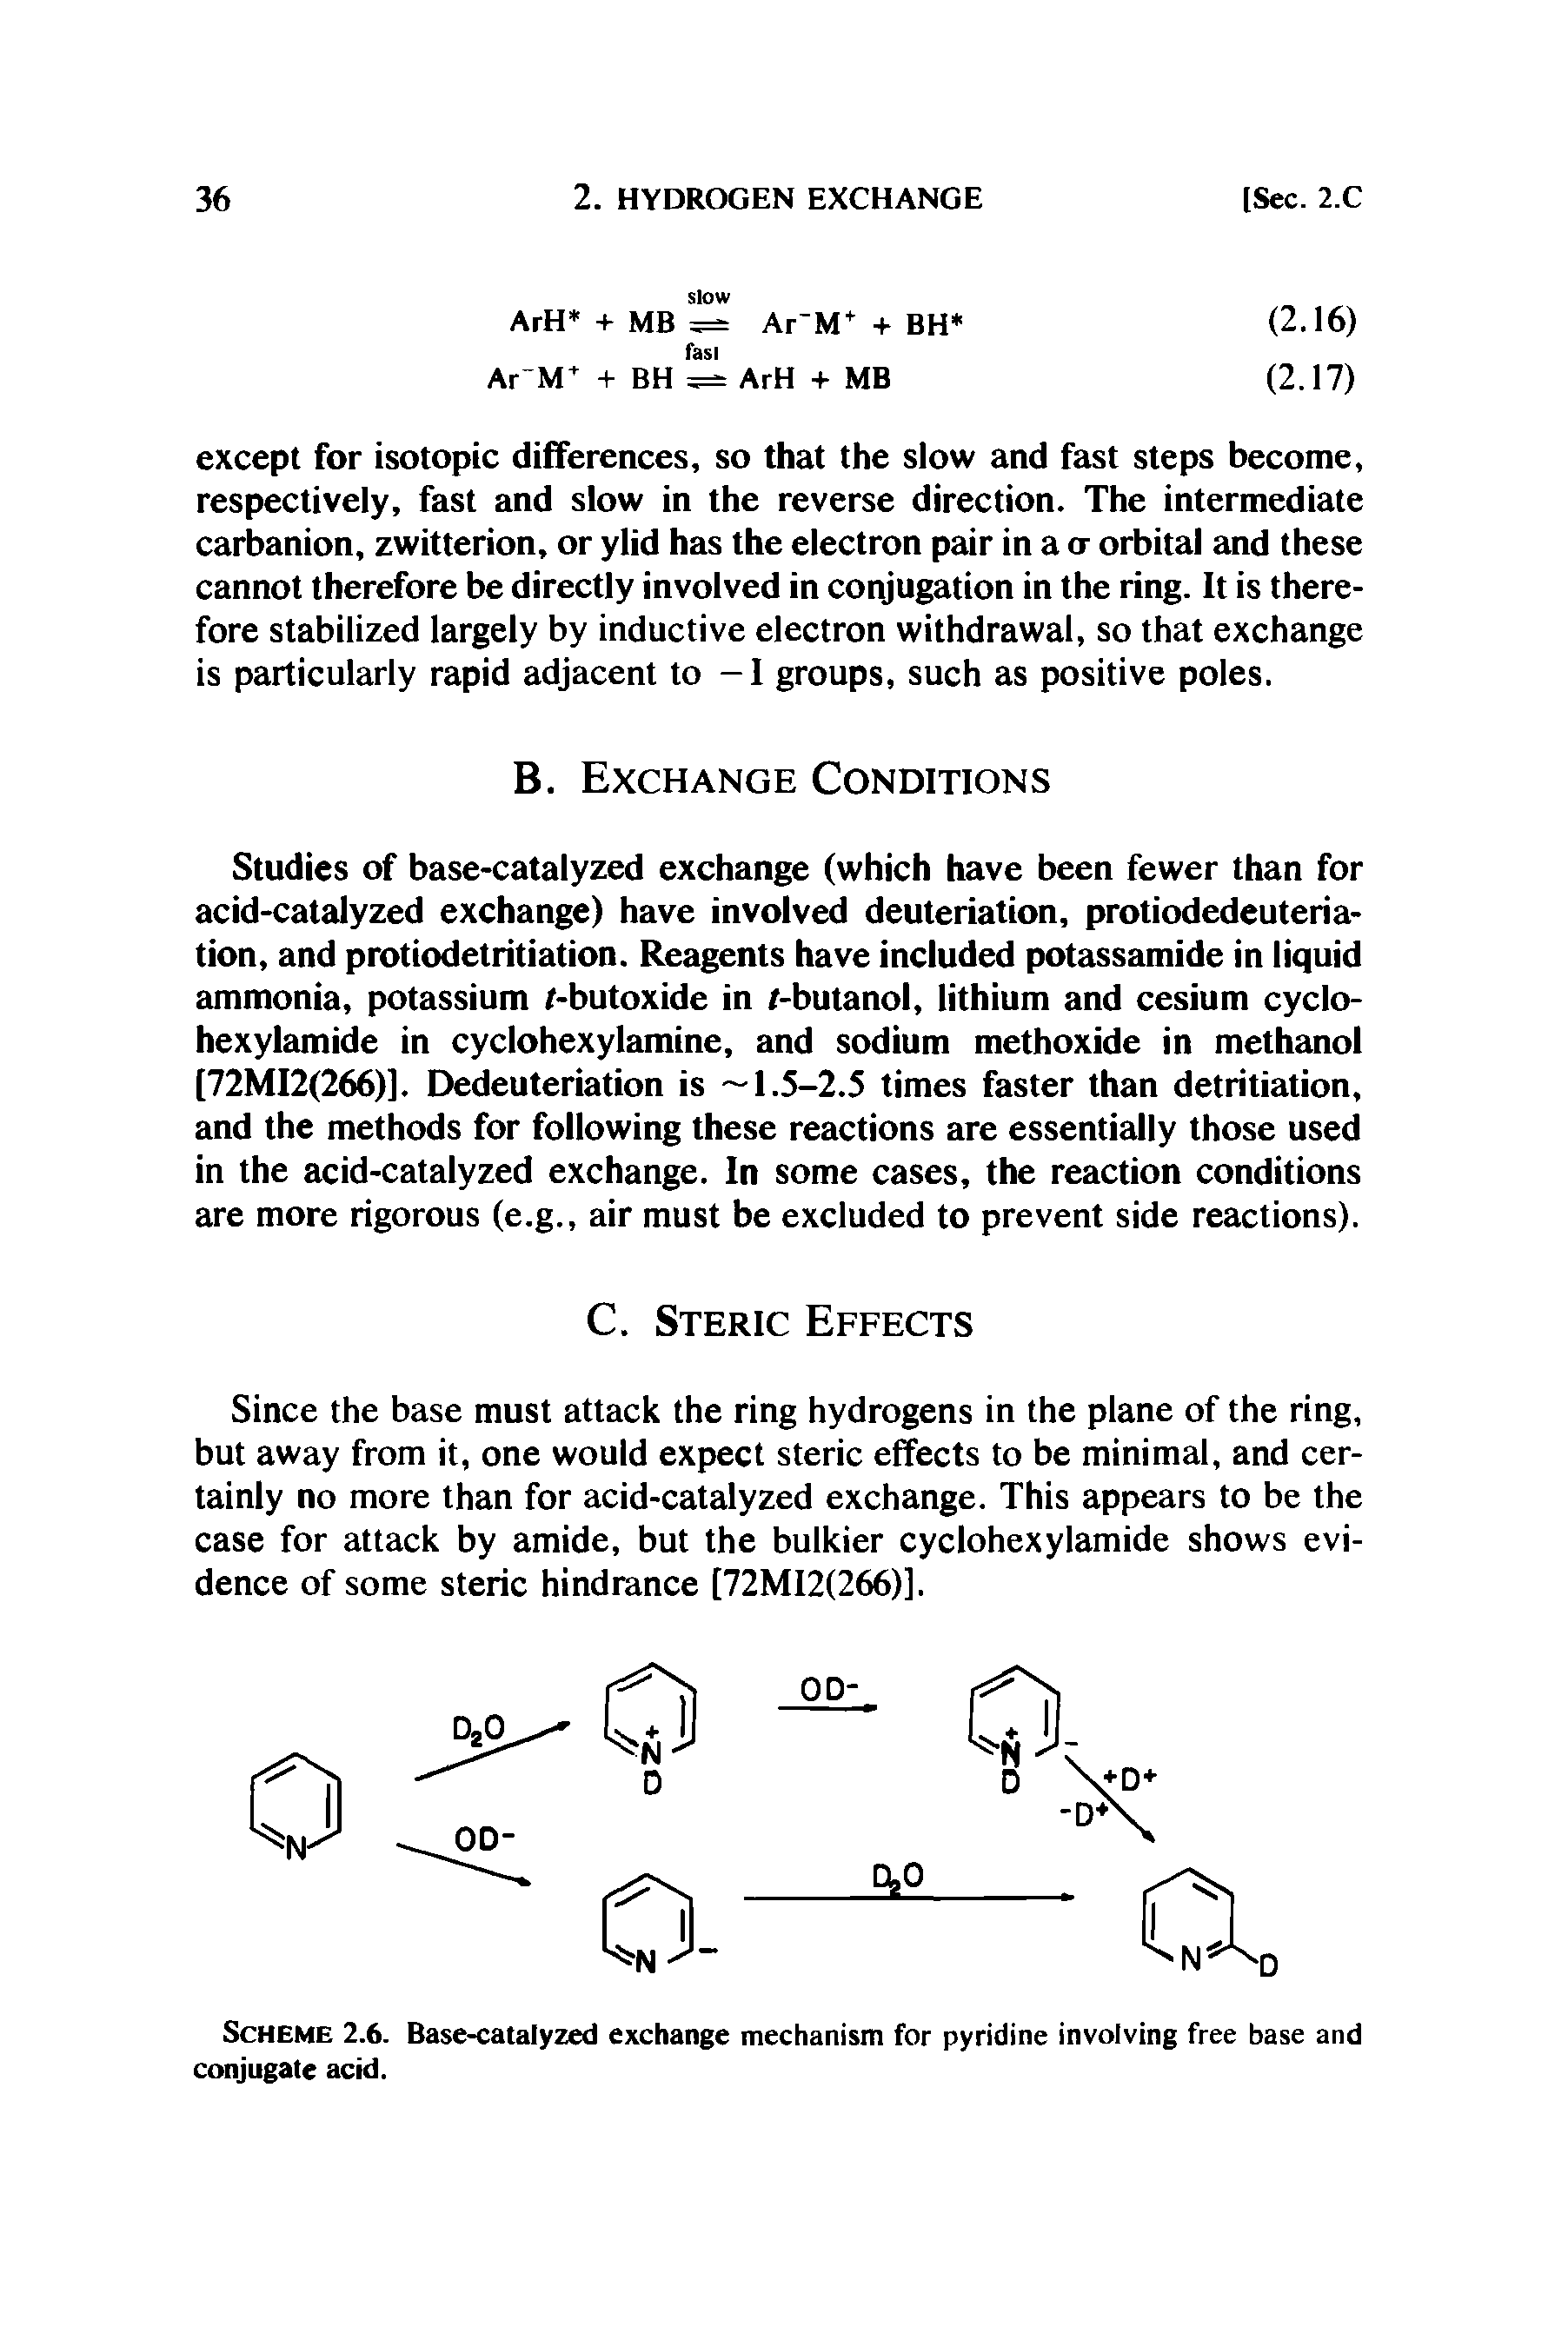 Scheme 2.6. Base-catalyzed exchange mechanism for pyridine involving free base and conjugate acid.